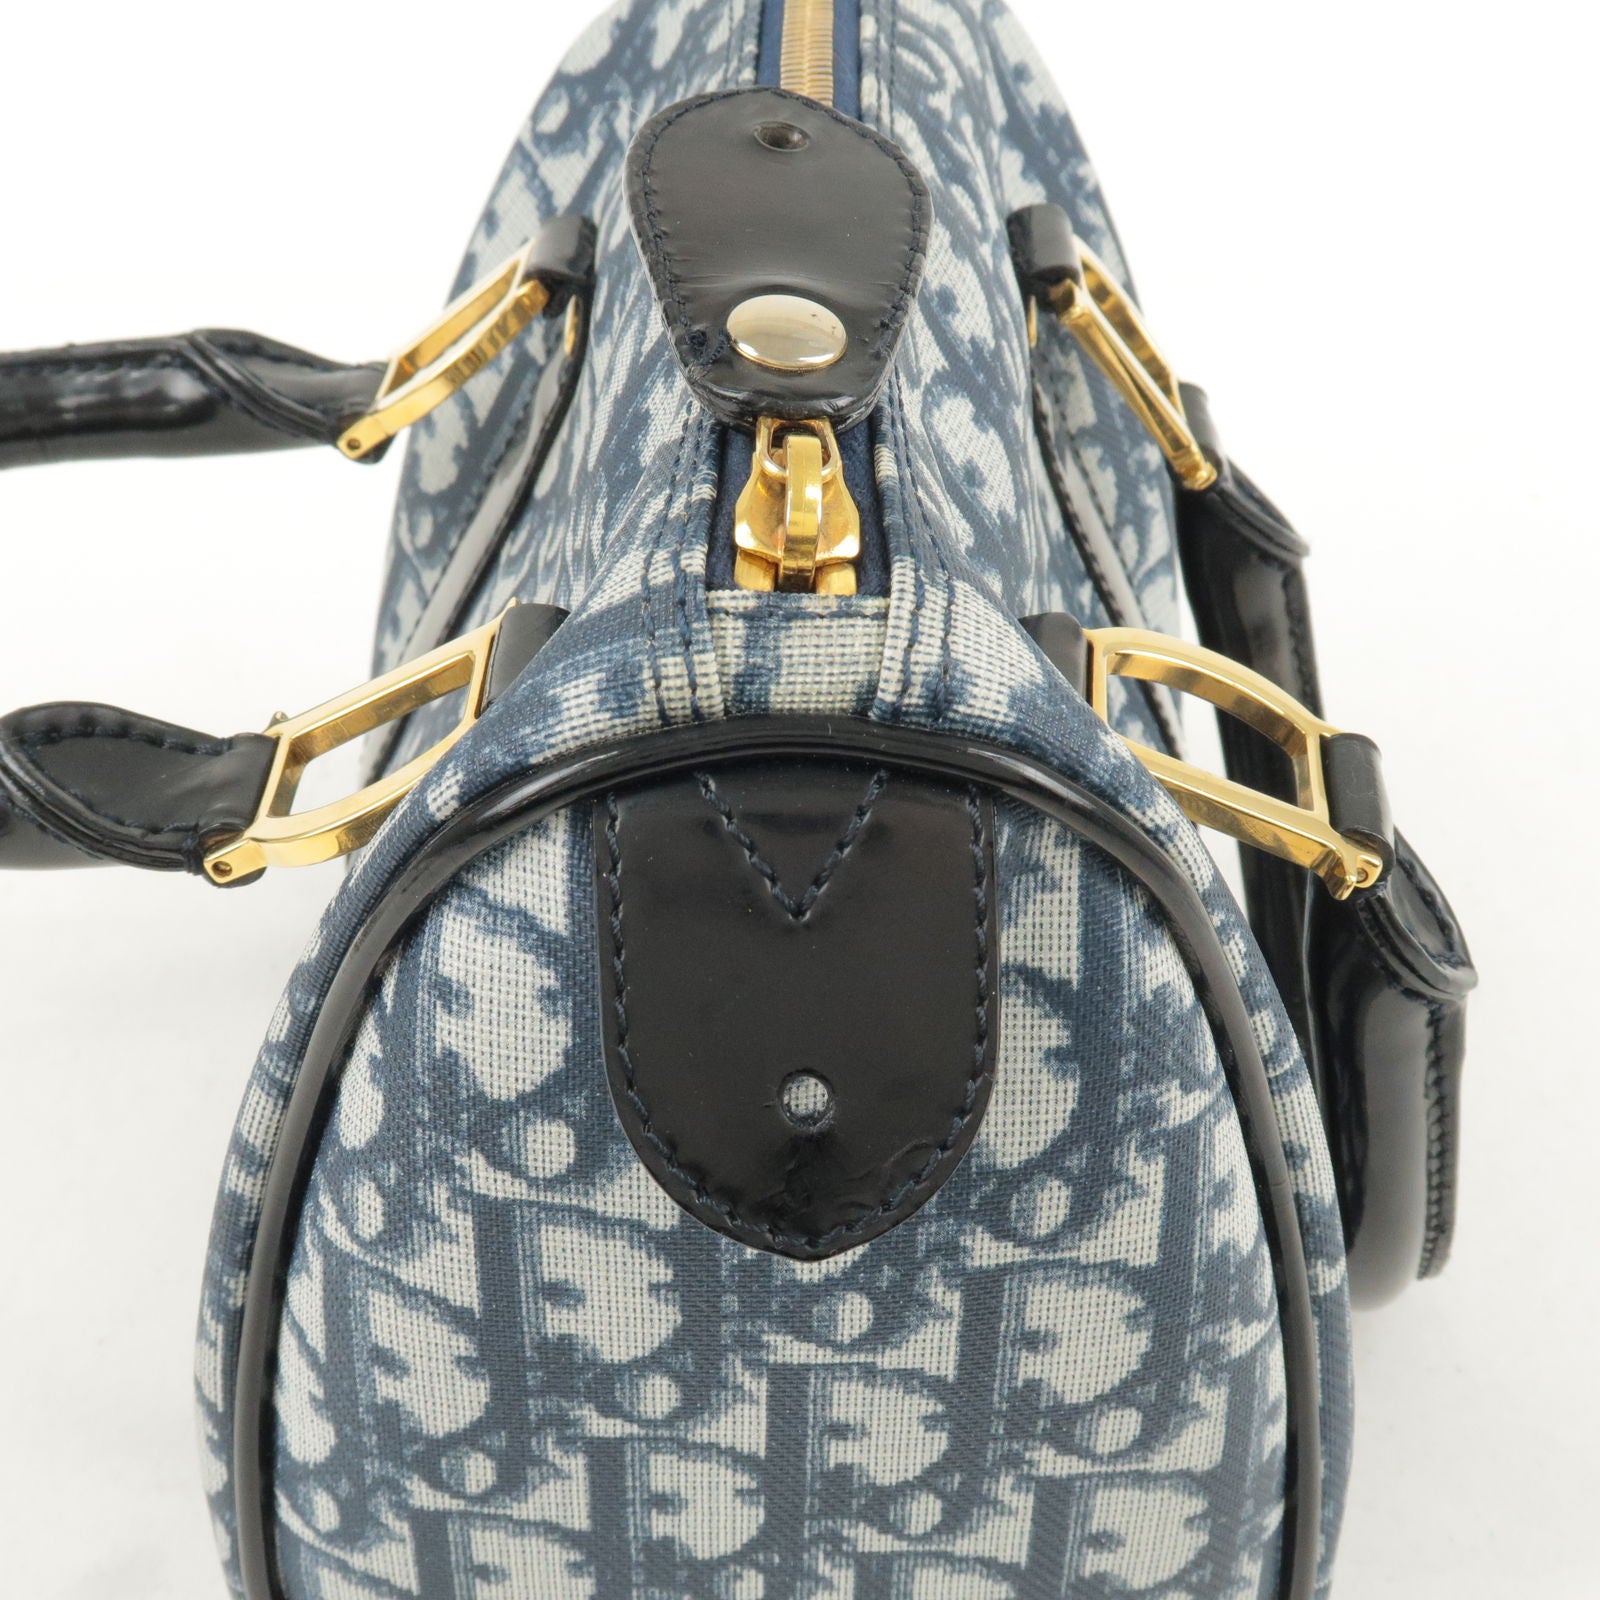 Pre Loved Dior Navy Backpack